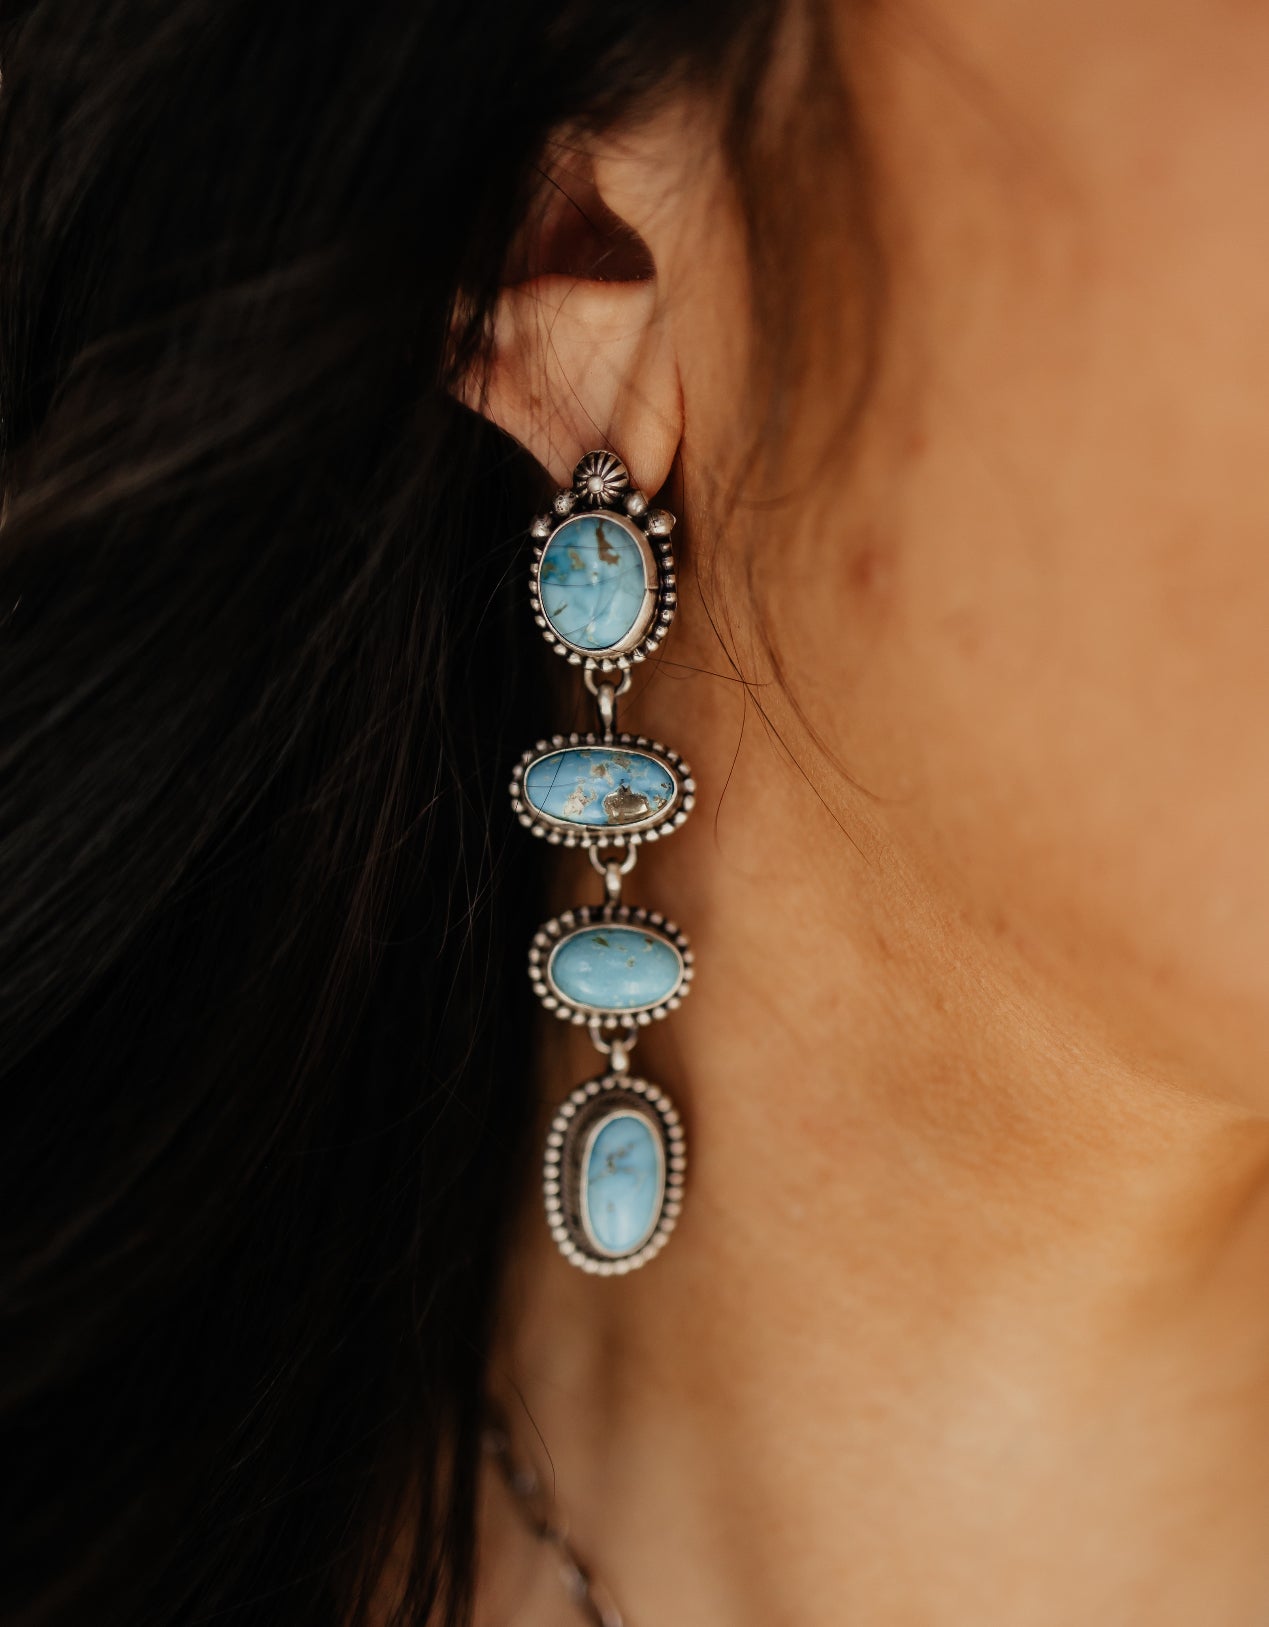 The Seminole Earrings